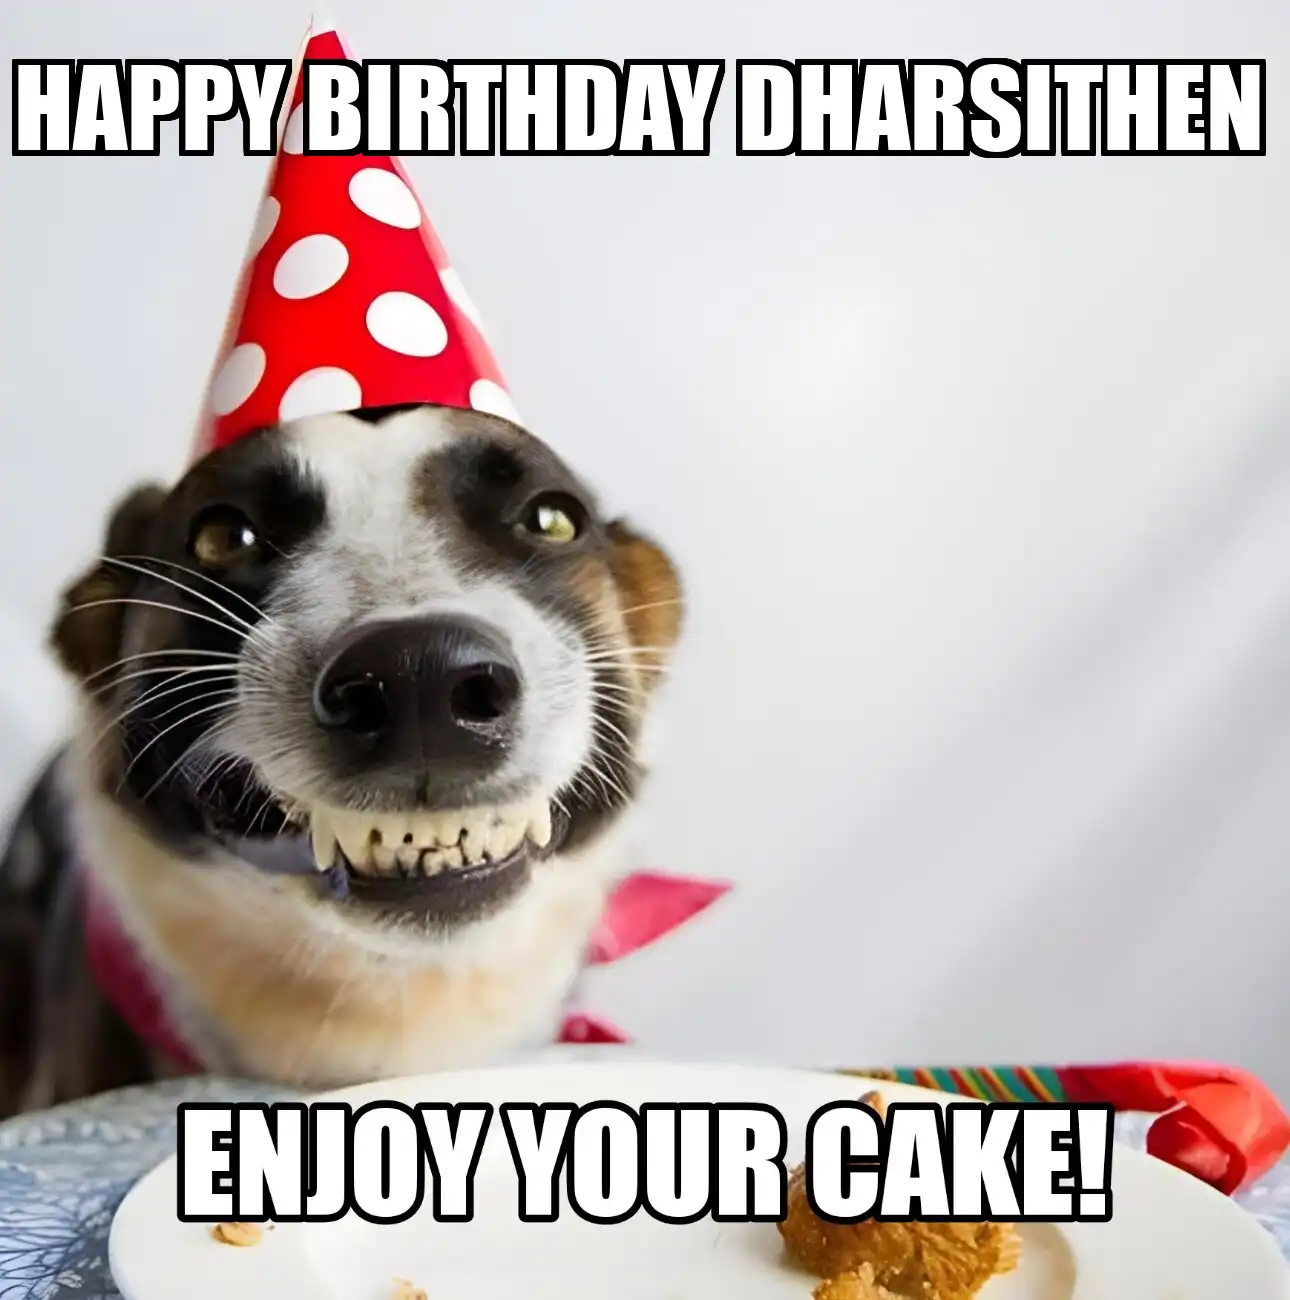 Happy Birthday Dharsithen Enjoy Your Cake Dog Meme